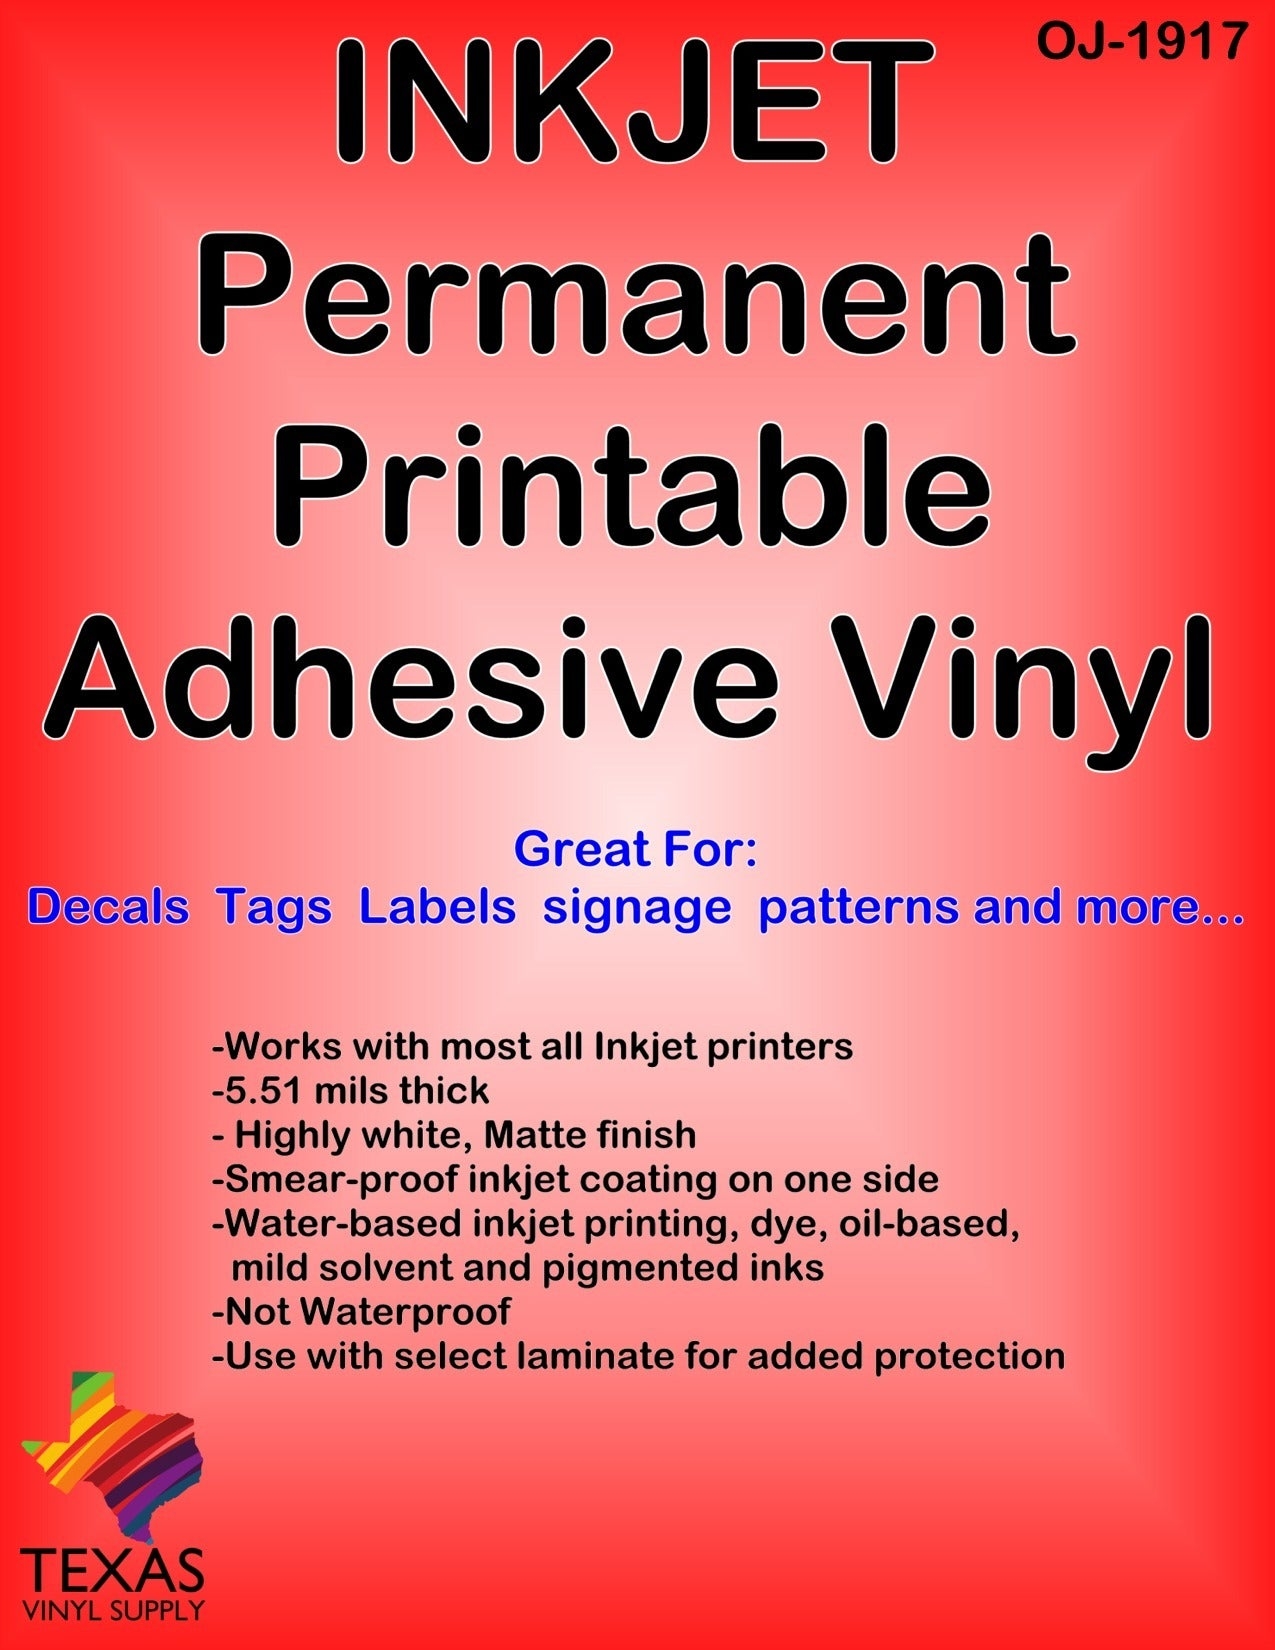 Orajet 1917M Inkjet Printable Adhesive Vinyl Texas Vinyl Supply